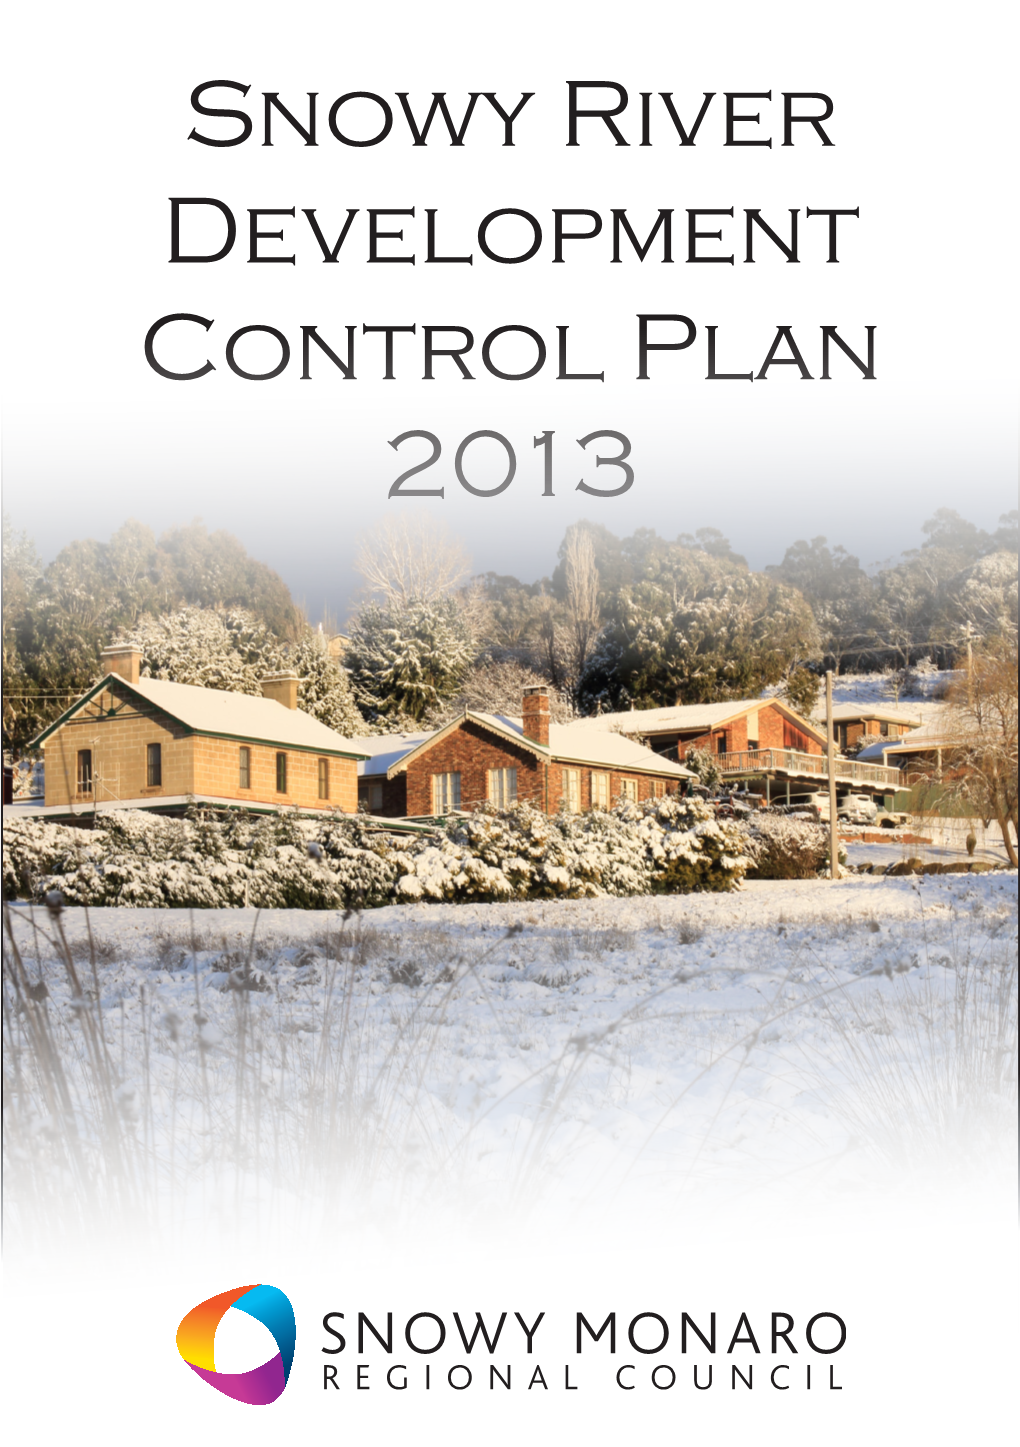 Snowy River Development Control Plan 2013 Contents